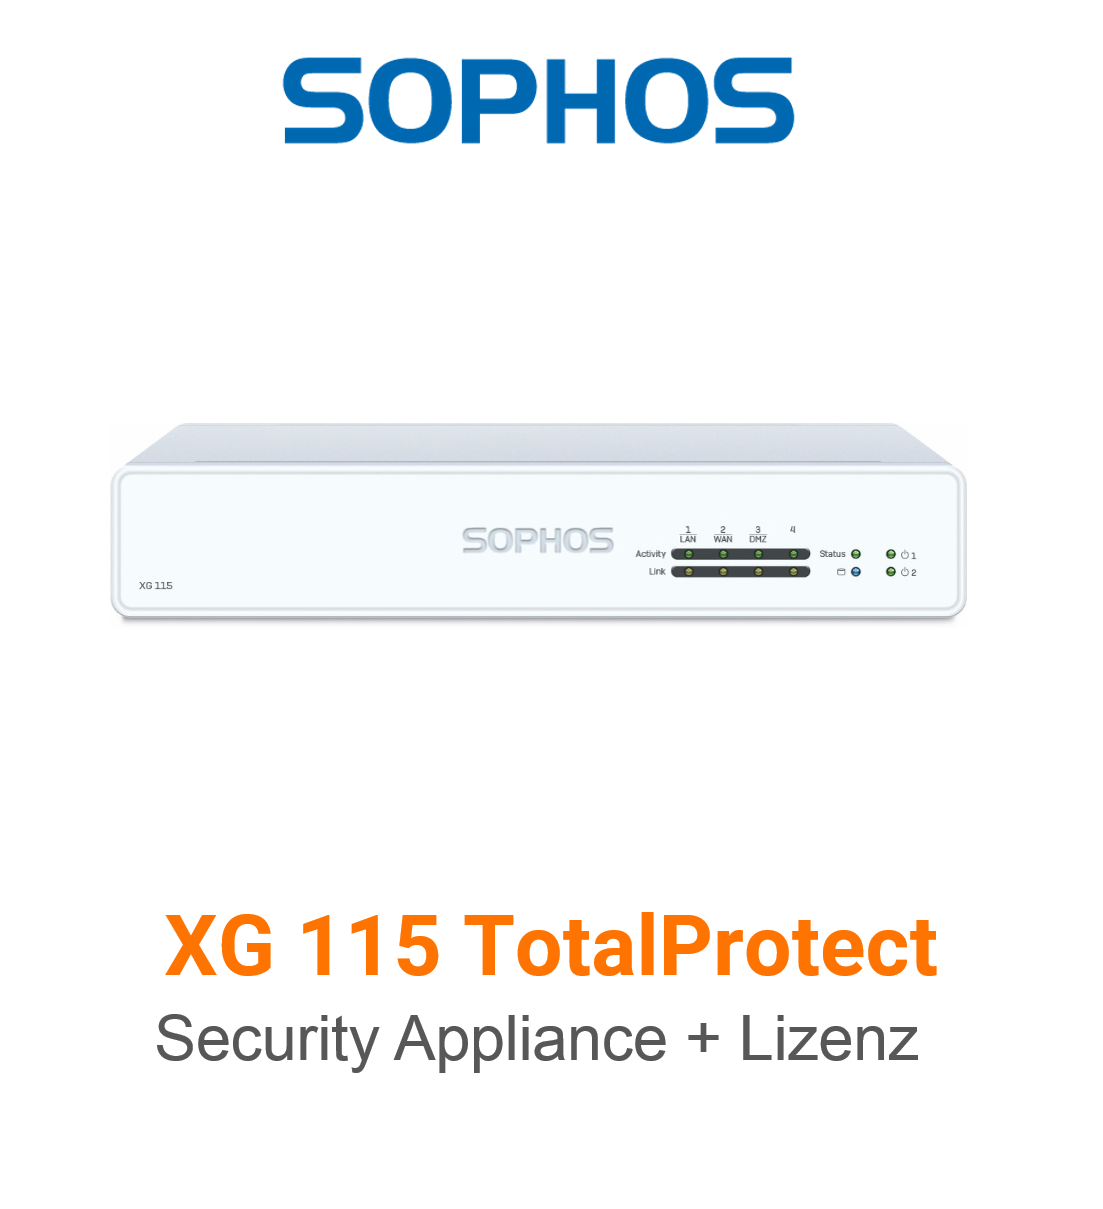 Sophos XG 115 TotalProtect Bundle (Hardware + Lizenz) (End of Sale/Life)